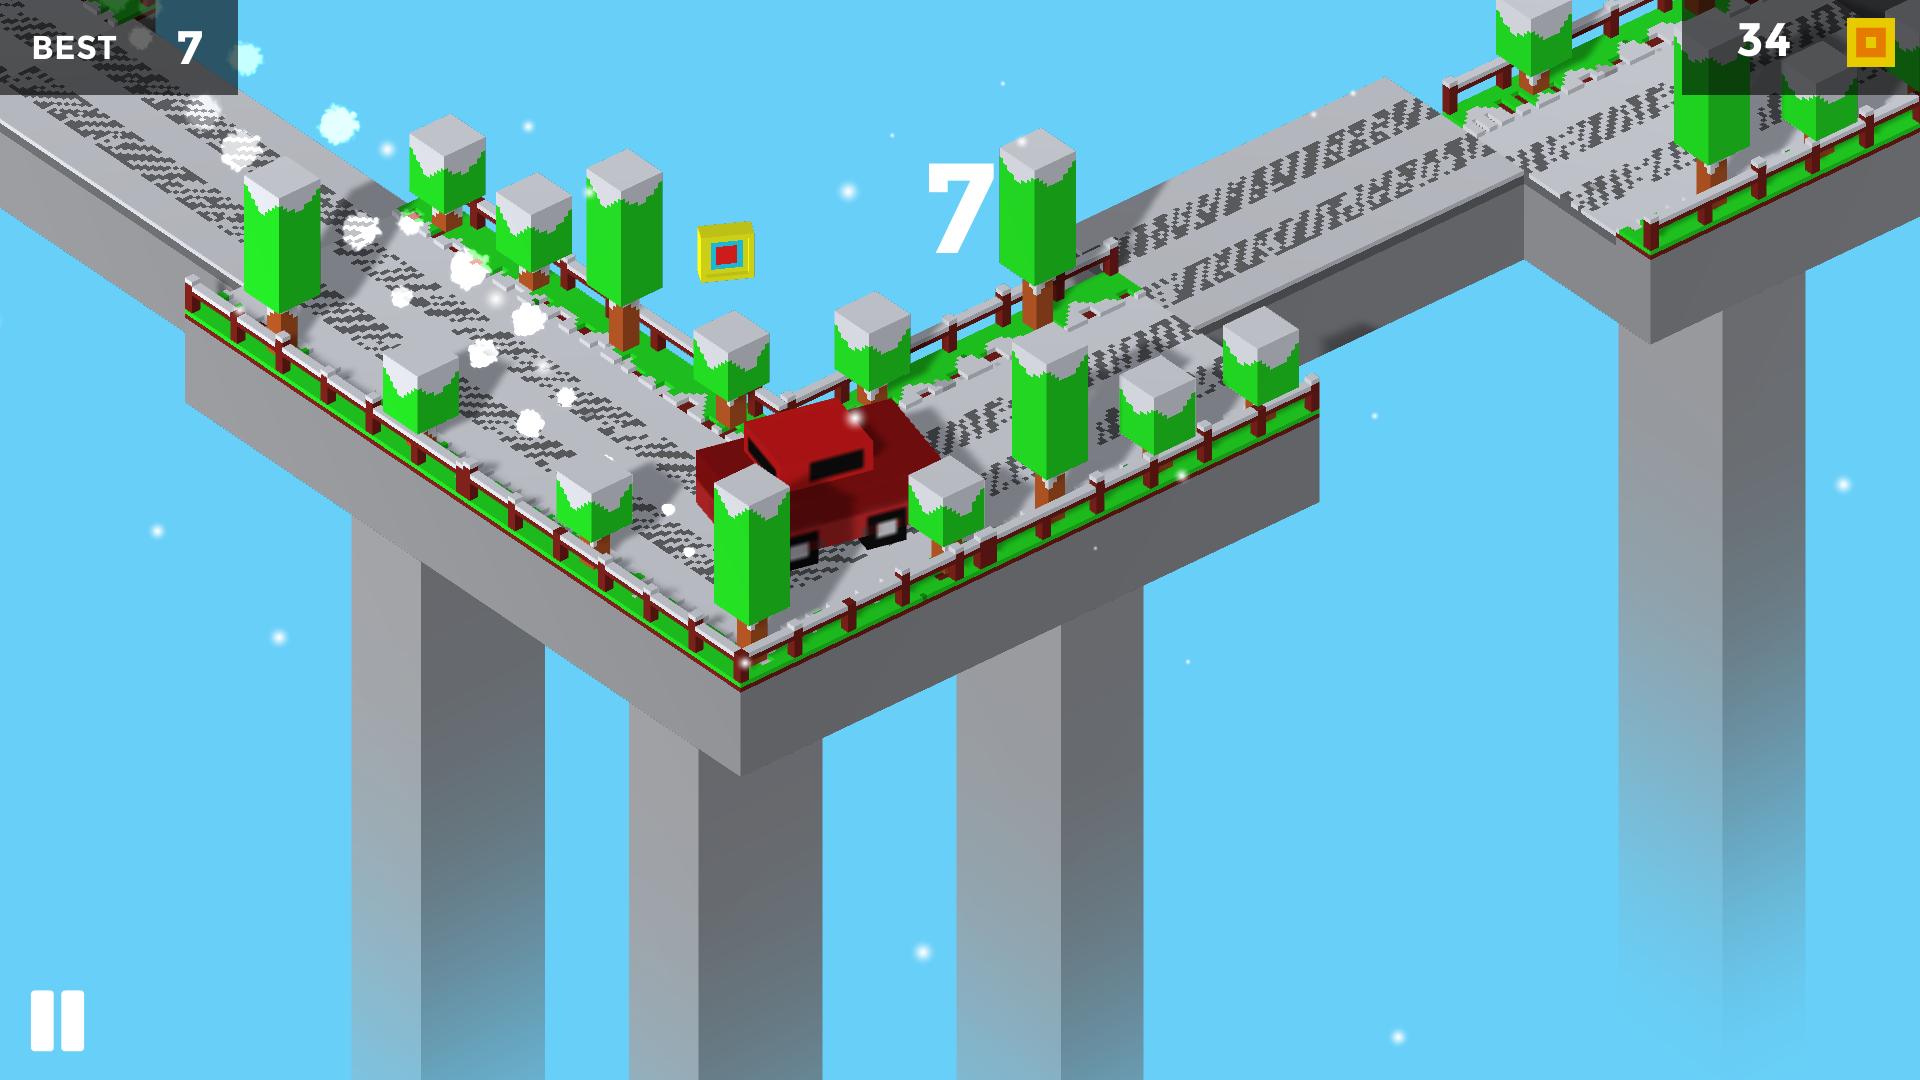 Pixel Traffic: Risky Bridge screenshot